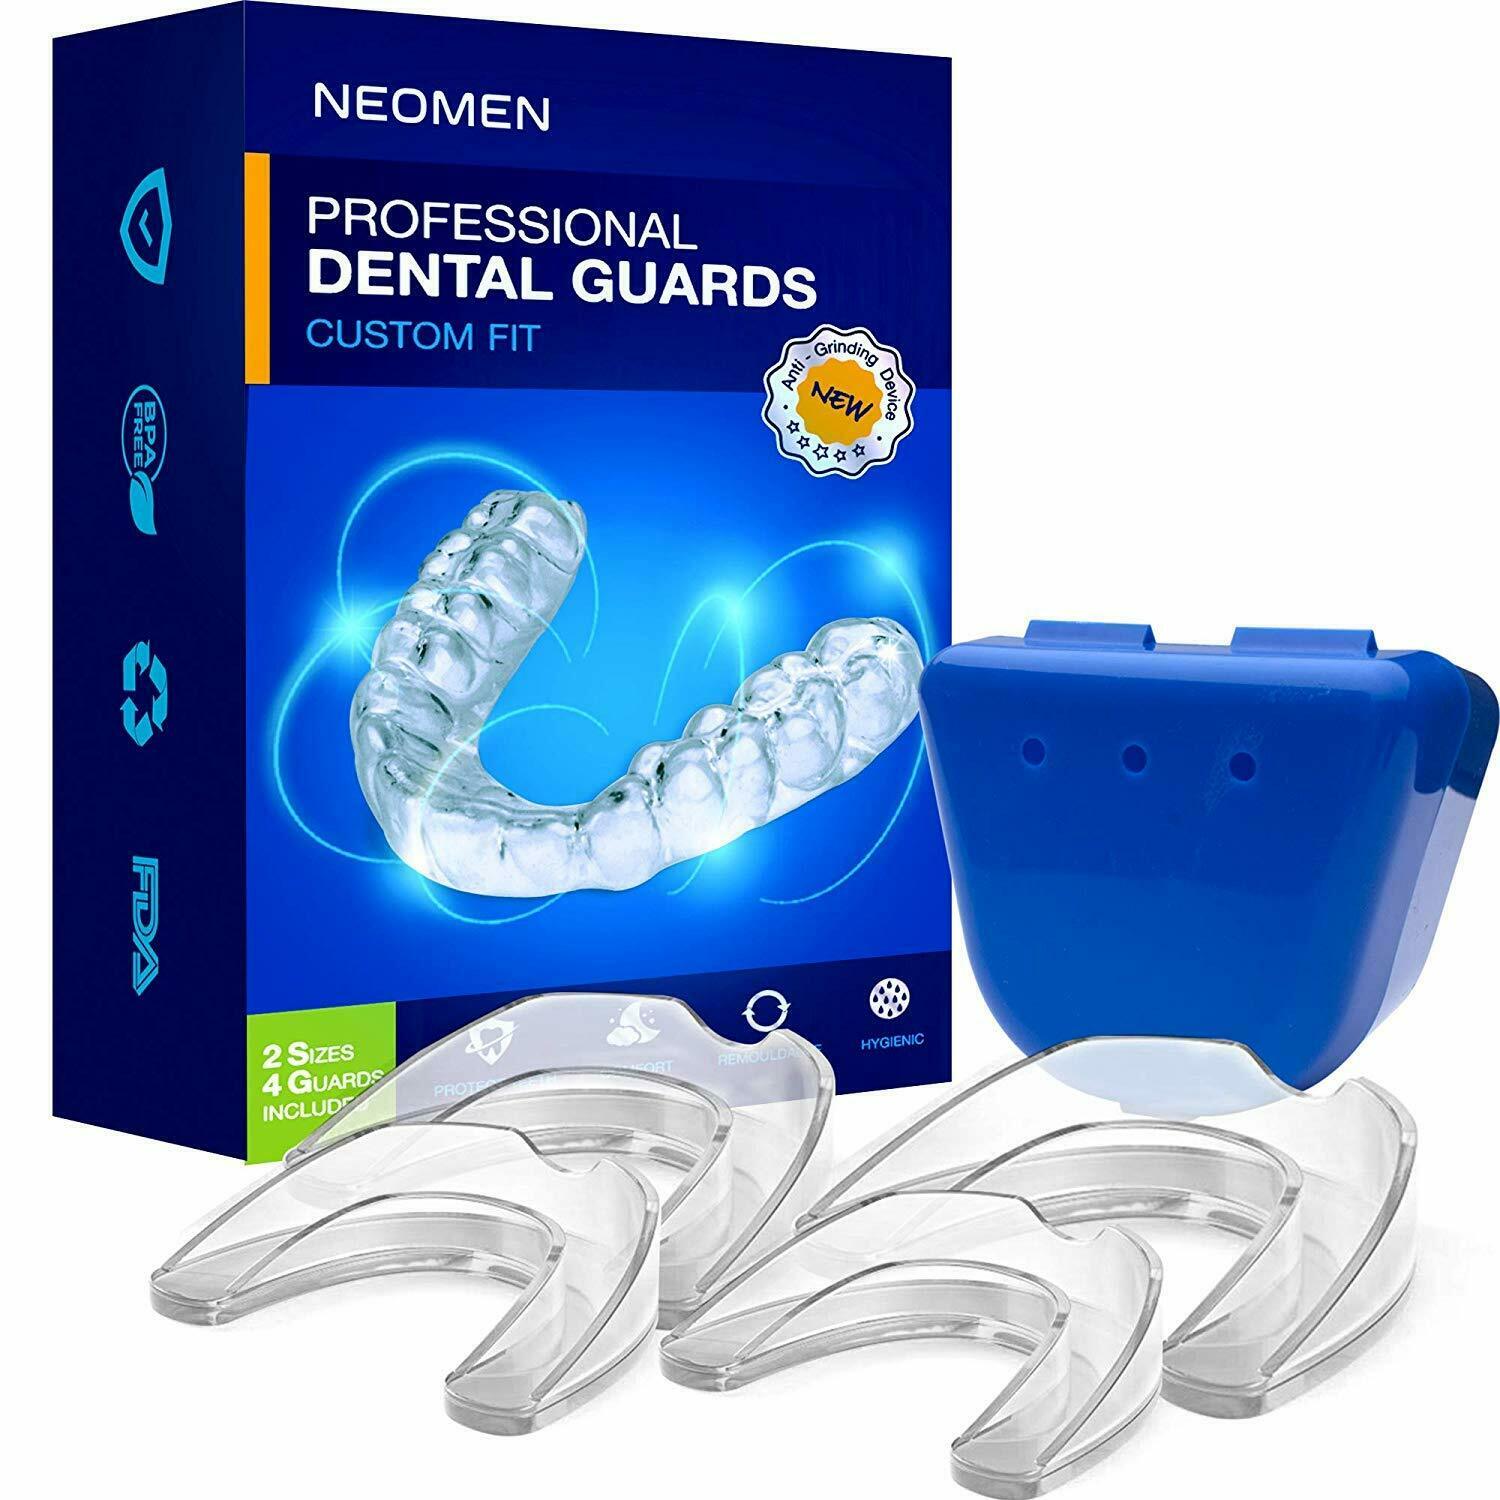 Neomen Professional Dental Guard - 2 Sizes, Pack Of 4,100% Satisfaction